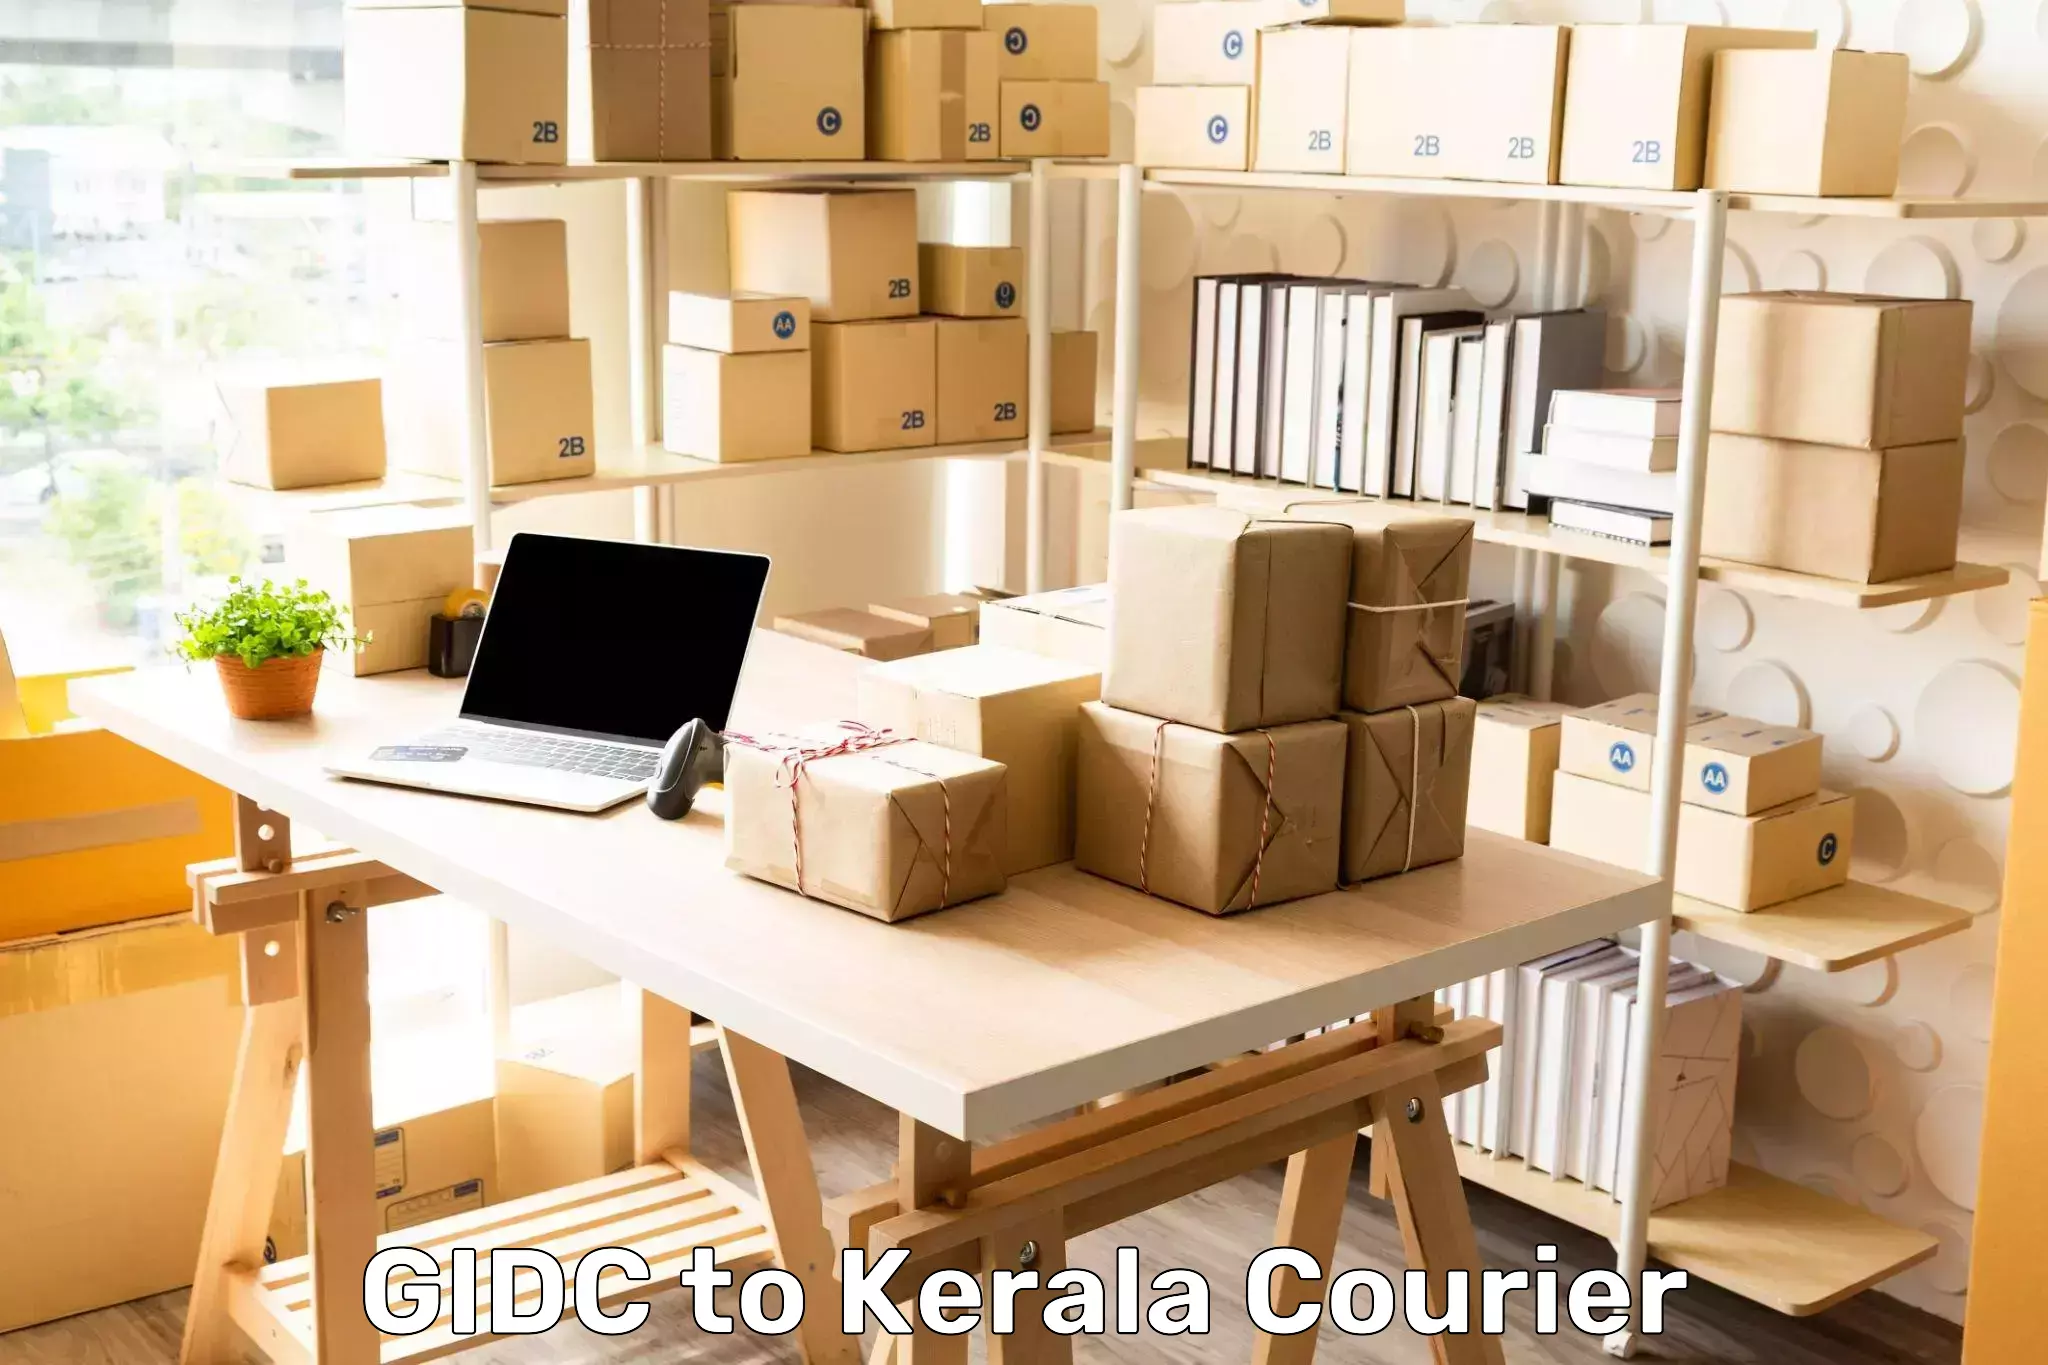 Express courier capabilities GIDC to Kerala